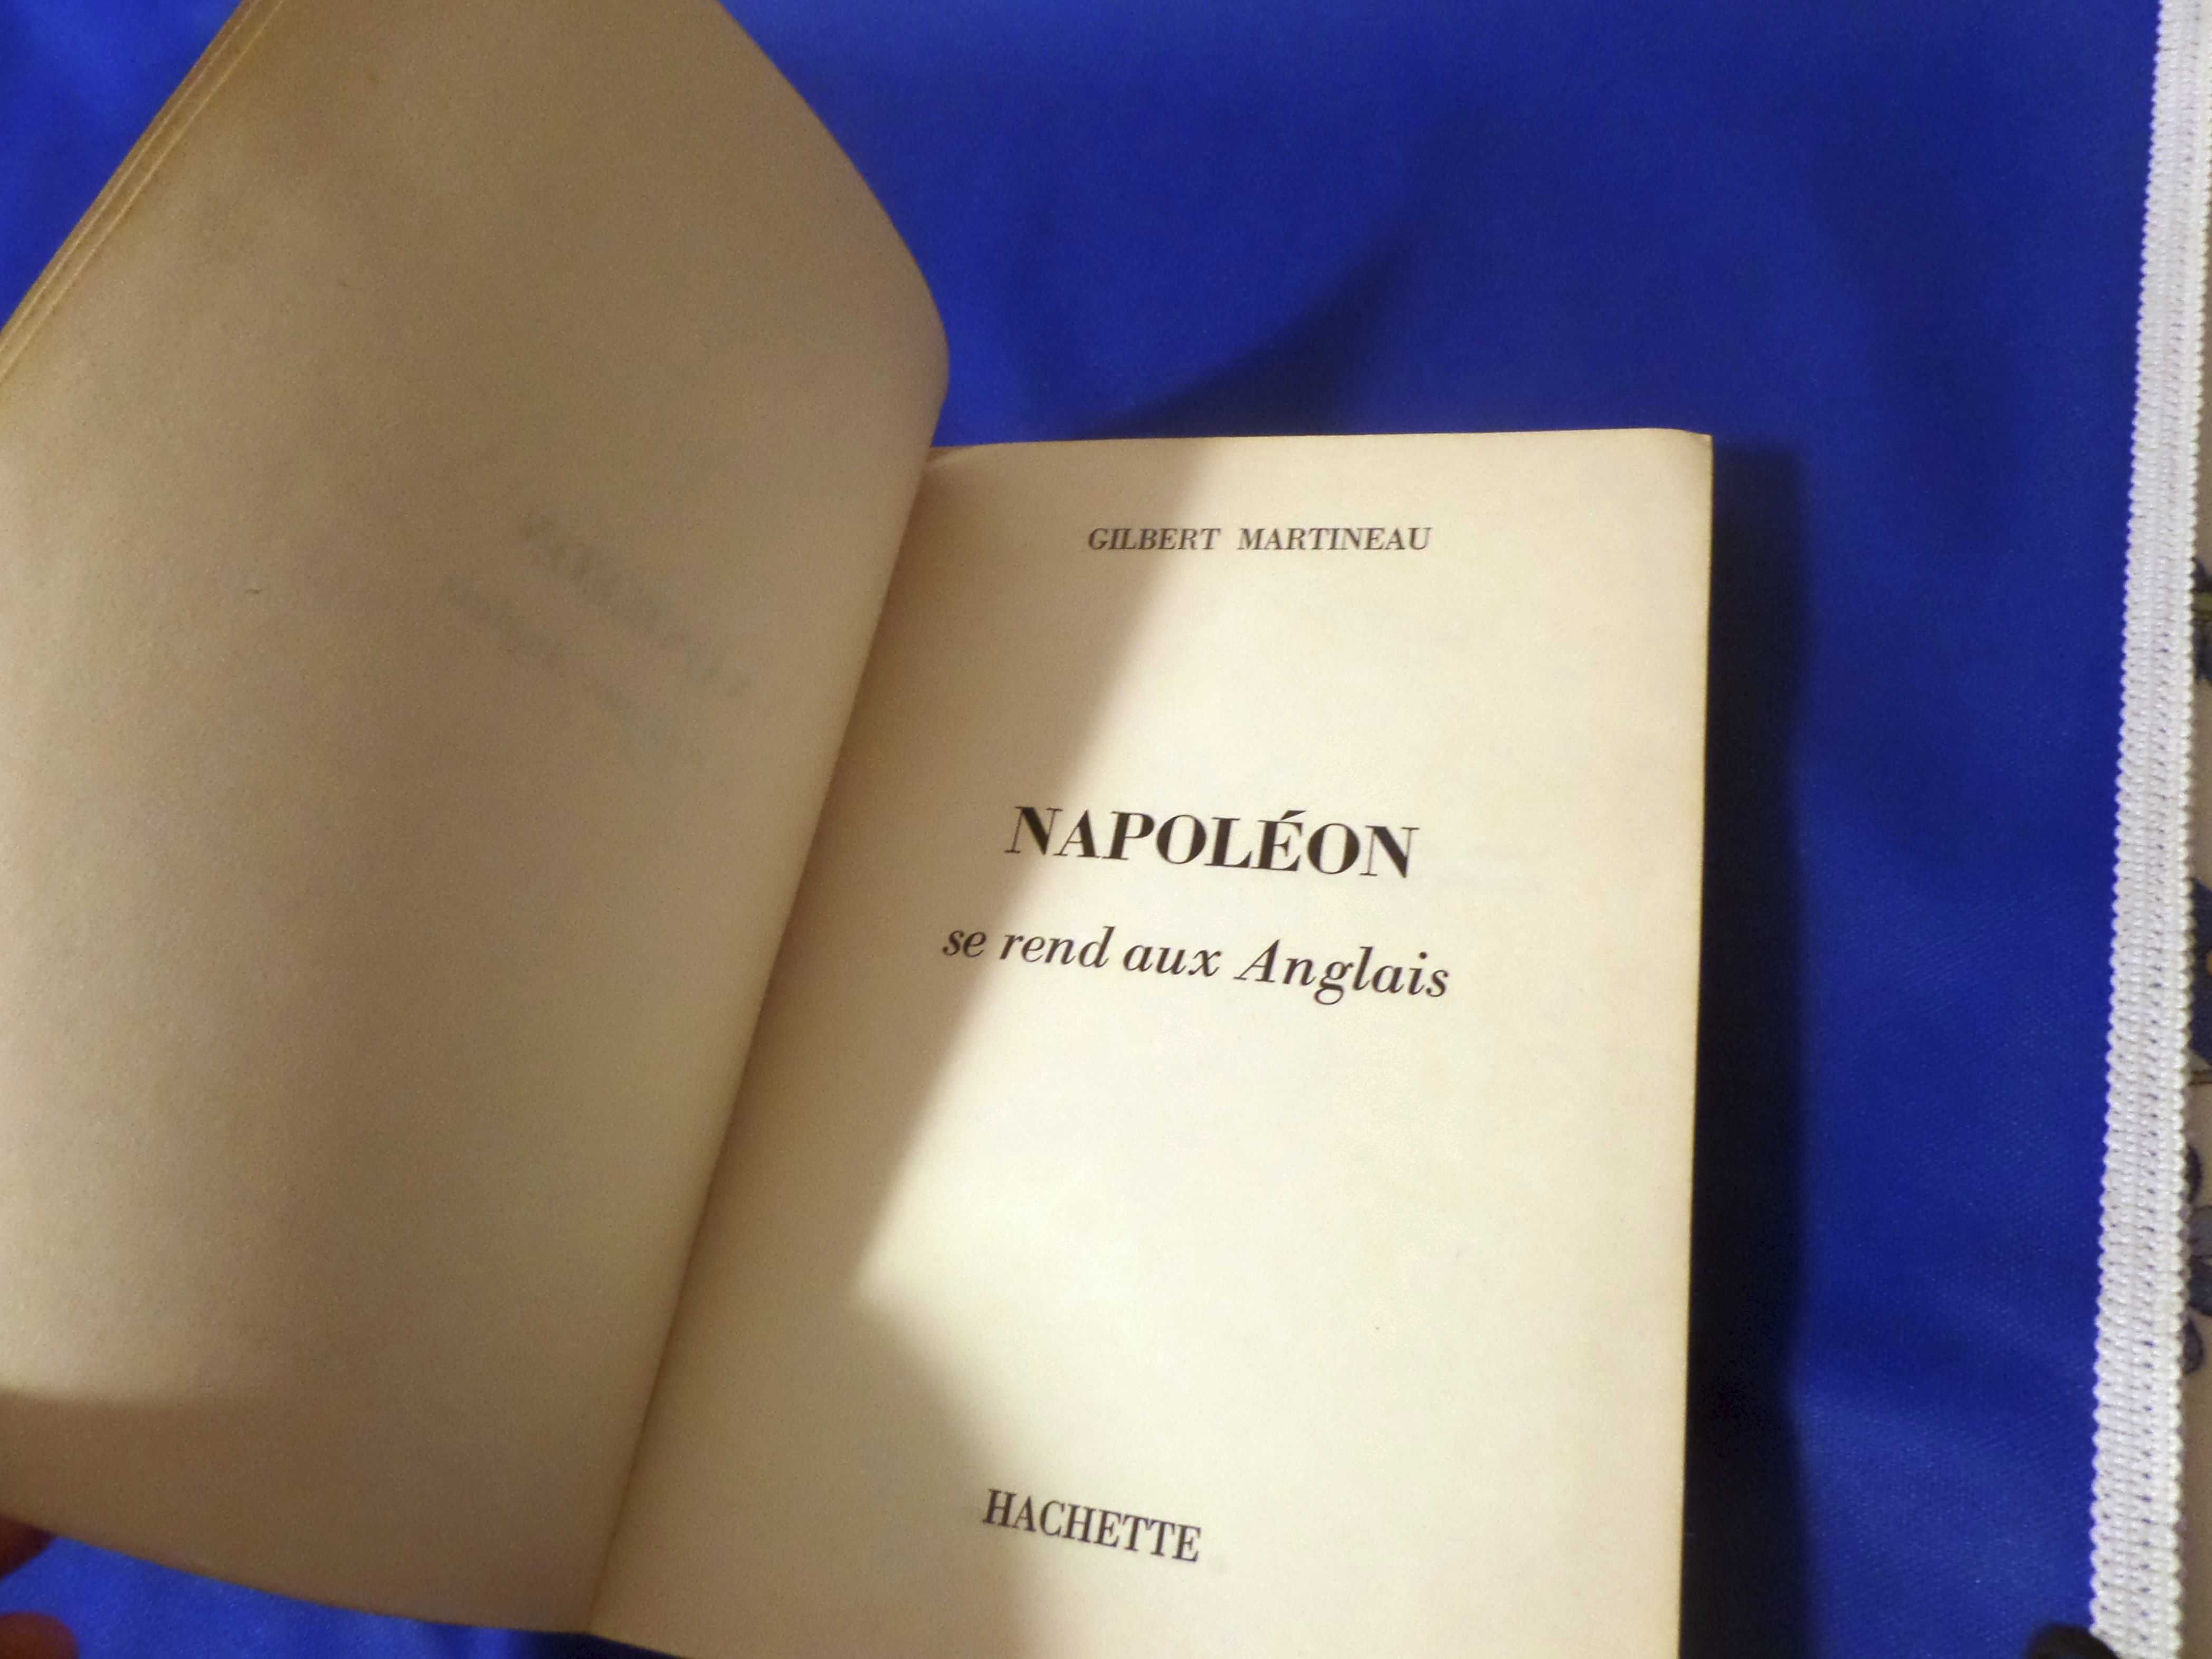 Napoléon se rend aux Anglais 
Gilbert Martineau